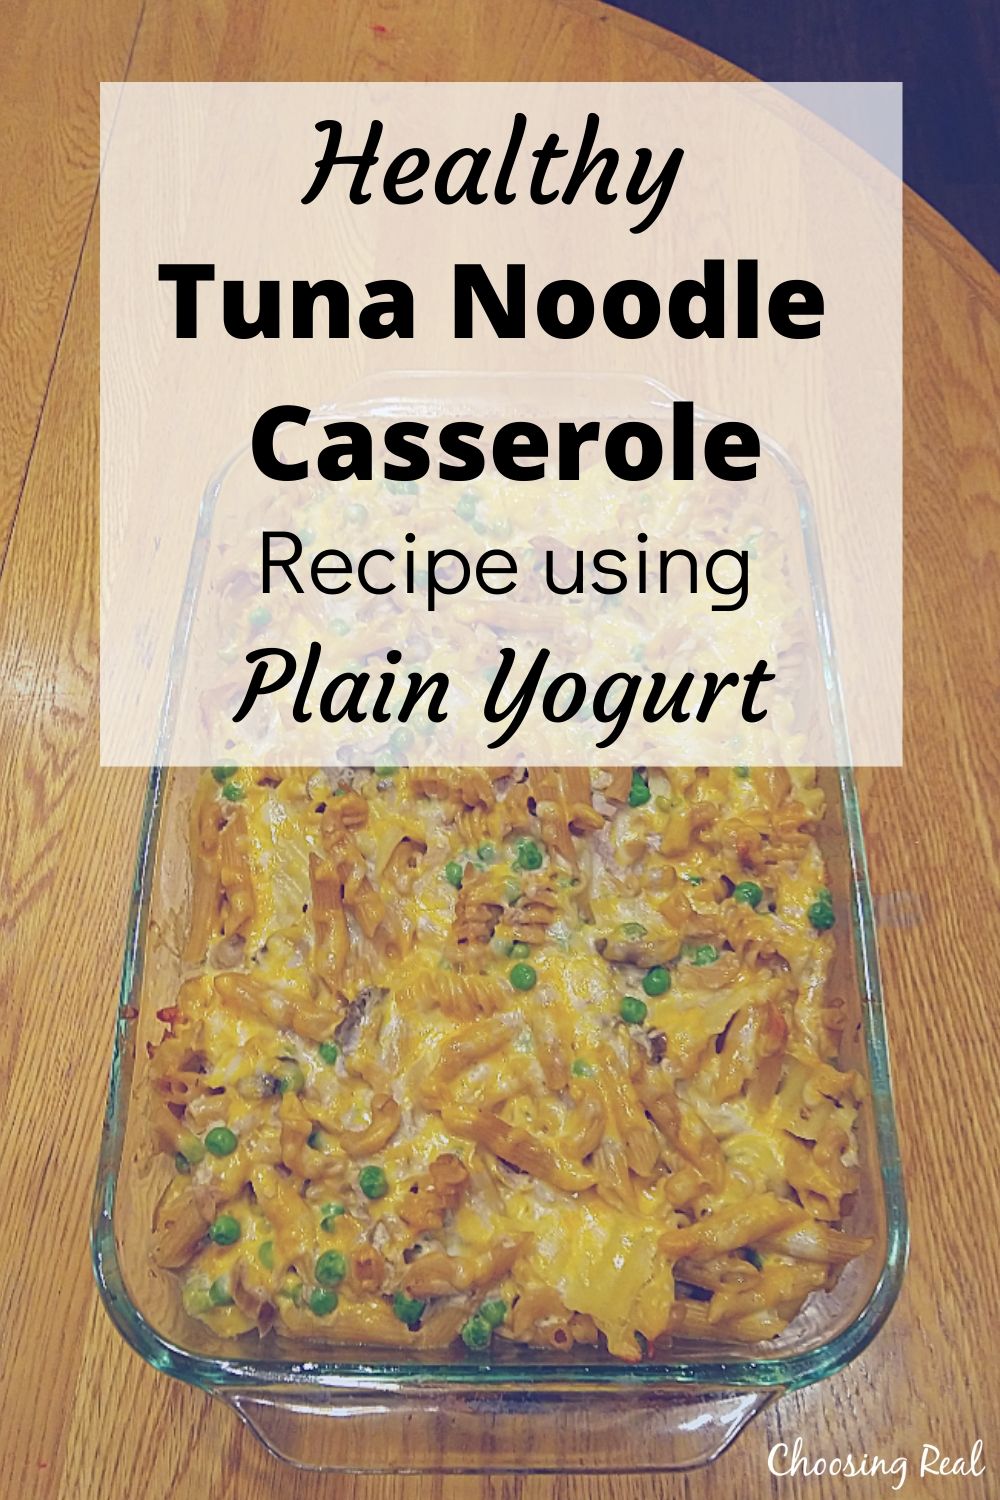 Healthy tuna noodle casserole recipe using plain yogurt